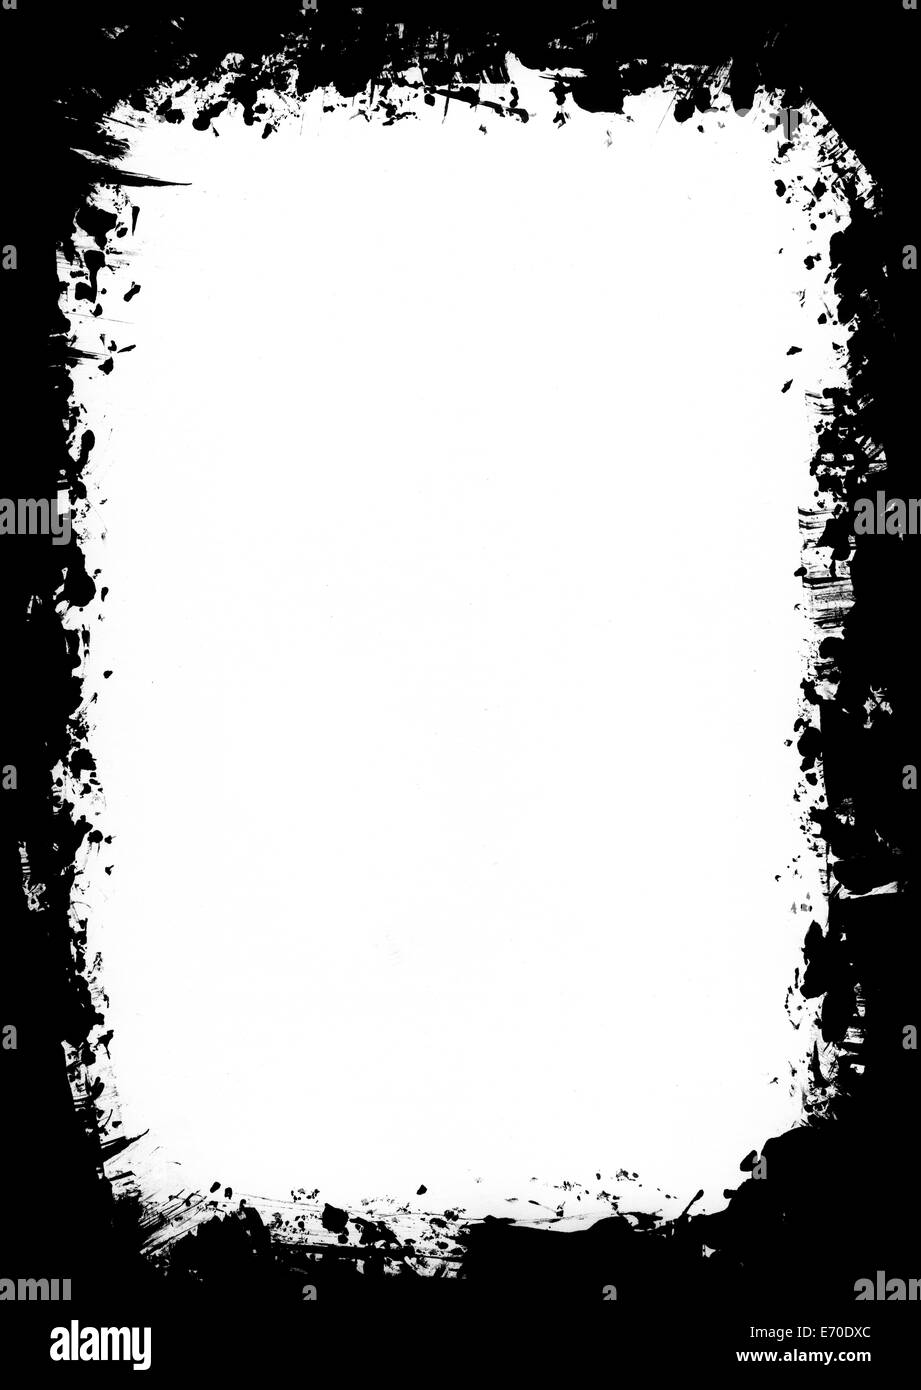 Black and White Grunge Border Stock Photo - Alamy